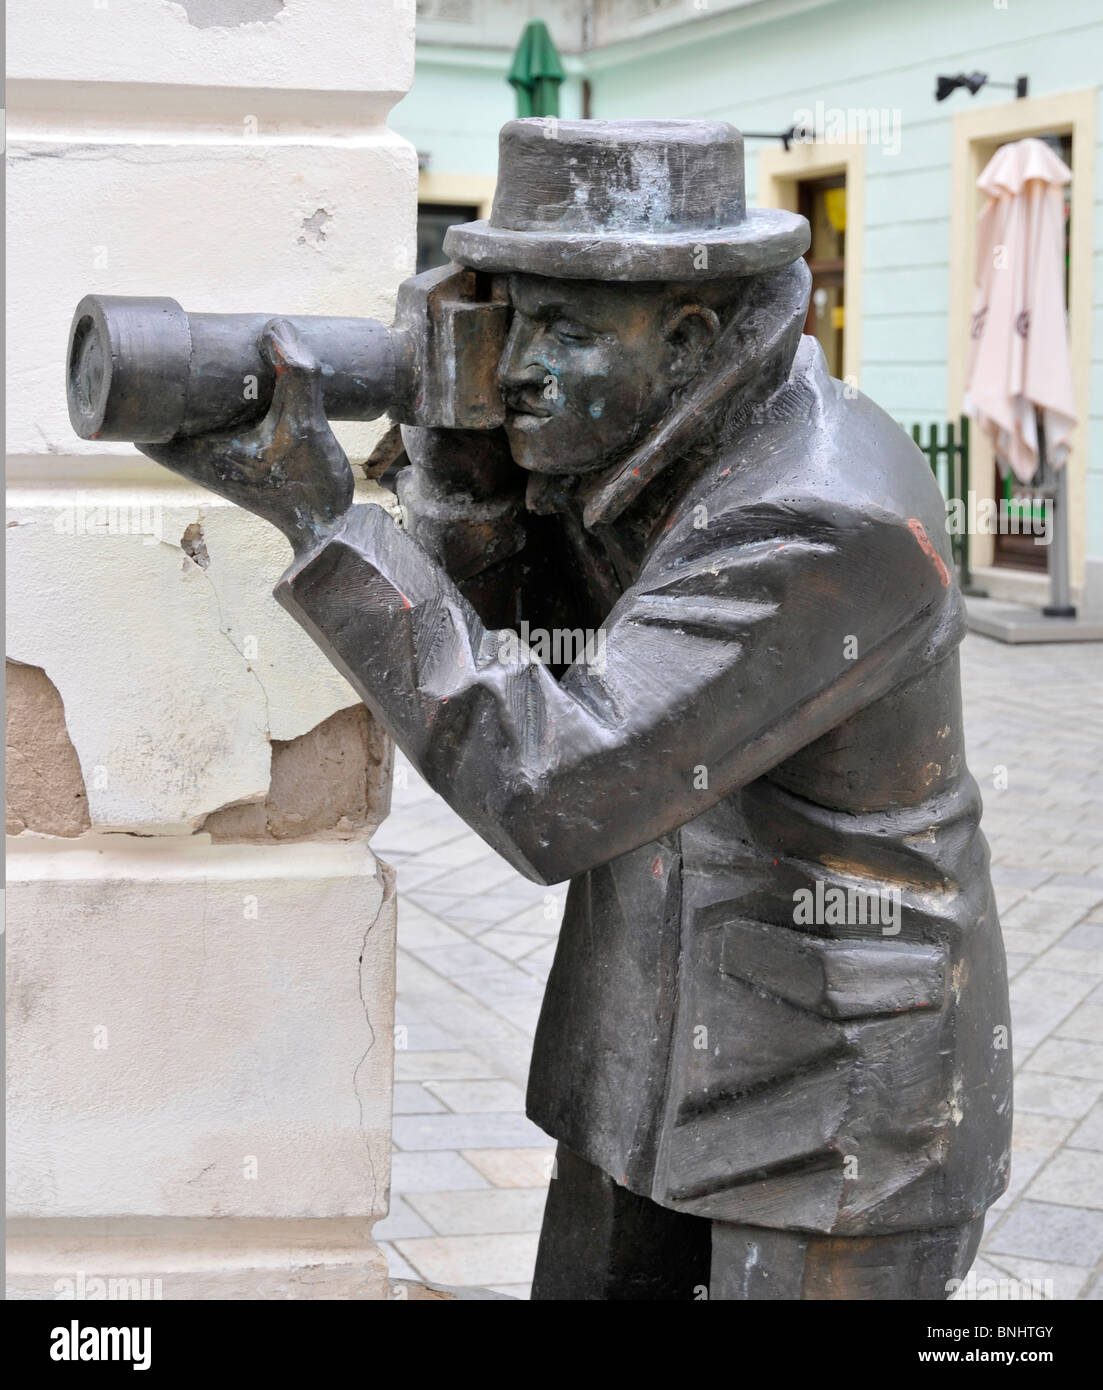 Statue of a paparazzi by sculptor Radko Macuha, Bratislava, Slovak Republic Stock Photo